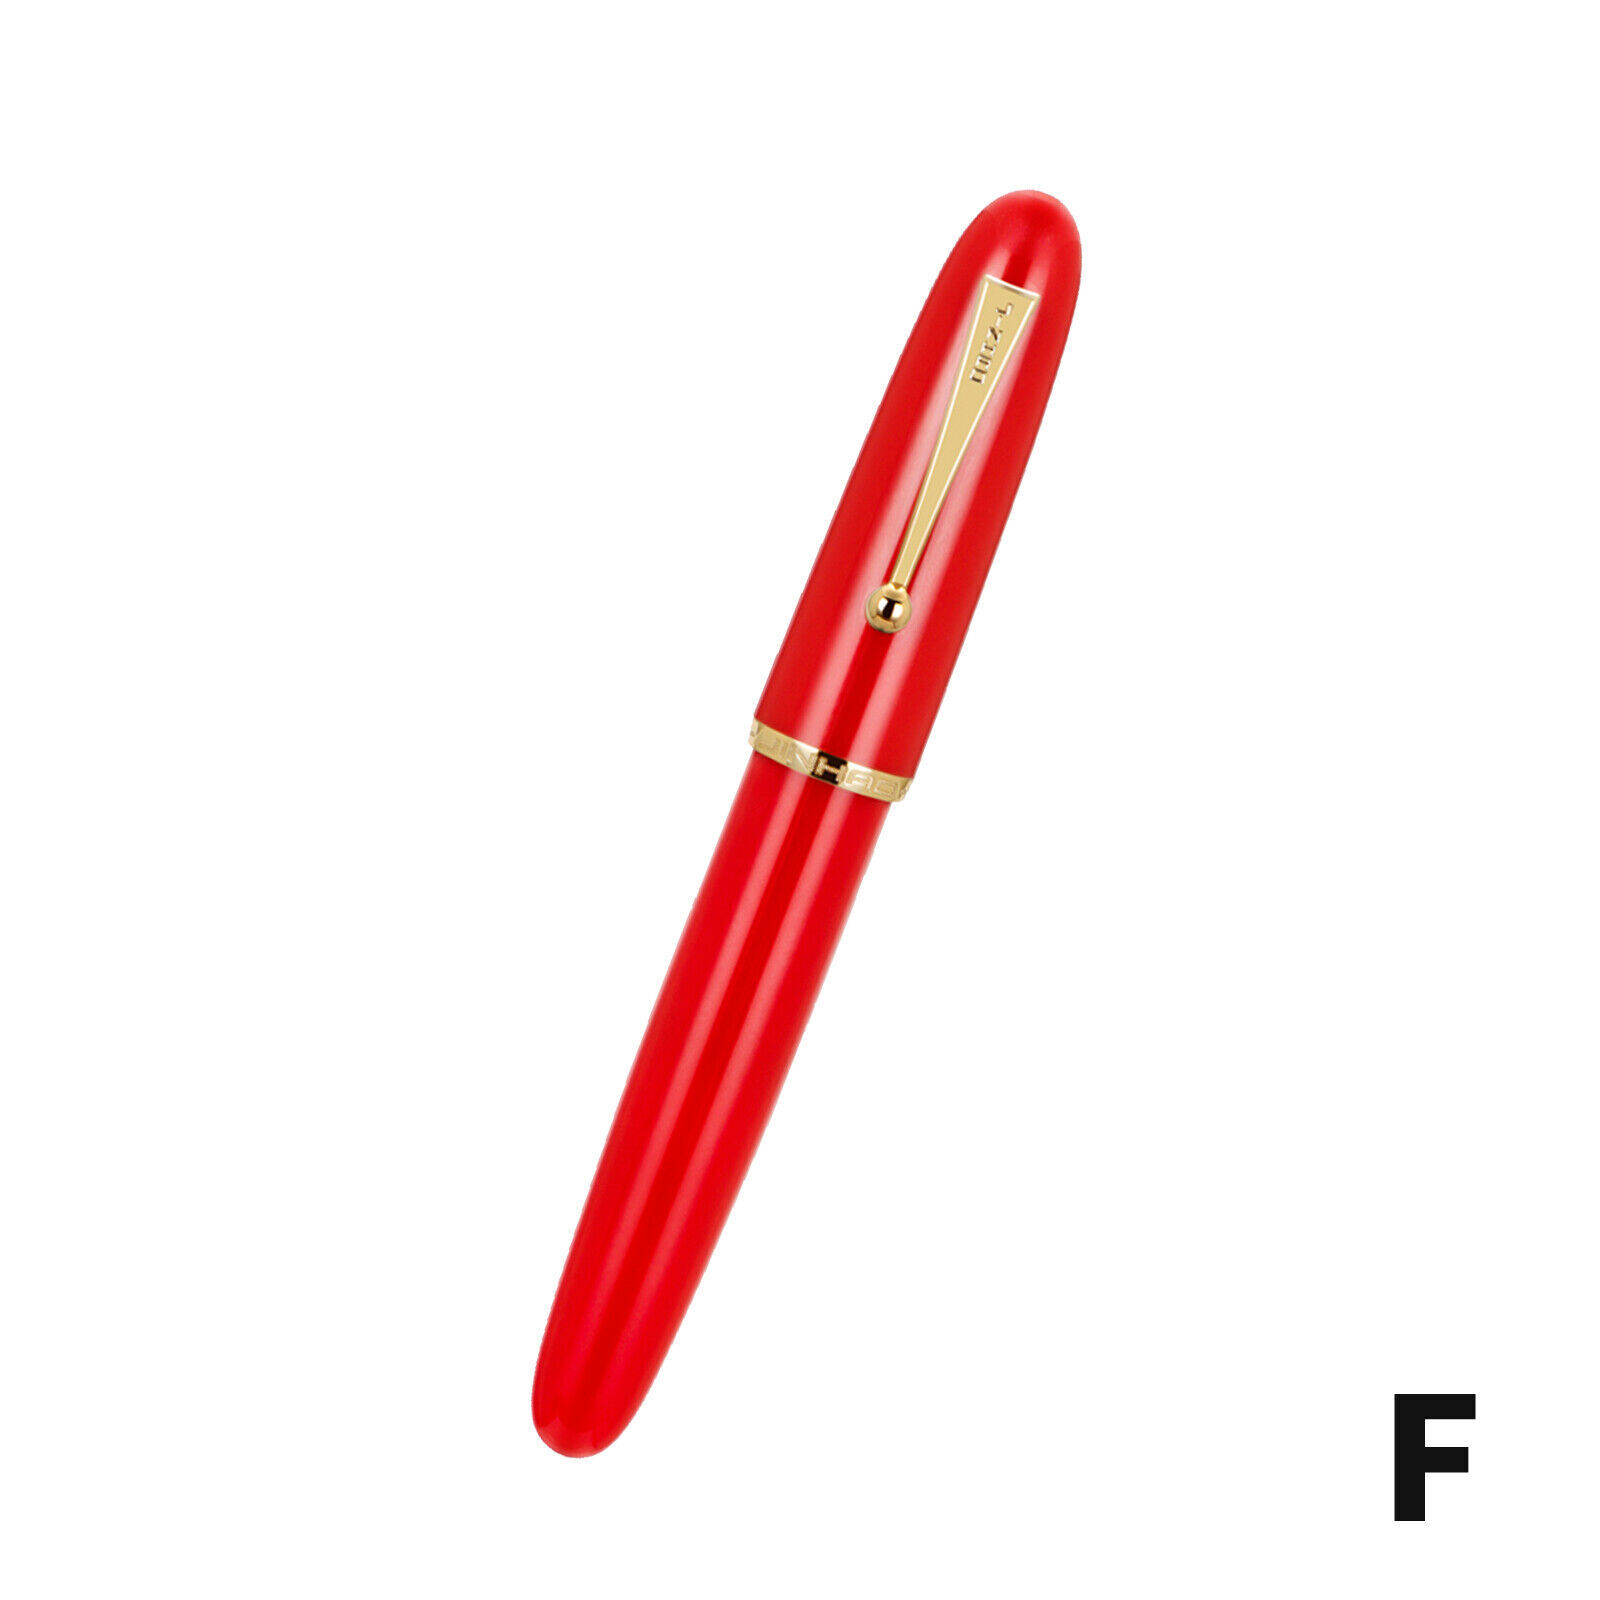 Jinhao 9019 Fountain Pen #8 F/M Heartbeat Nib, Vivid Red Resin & Large ConvertHT